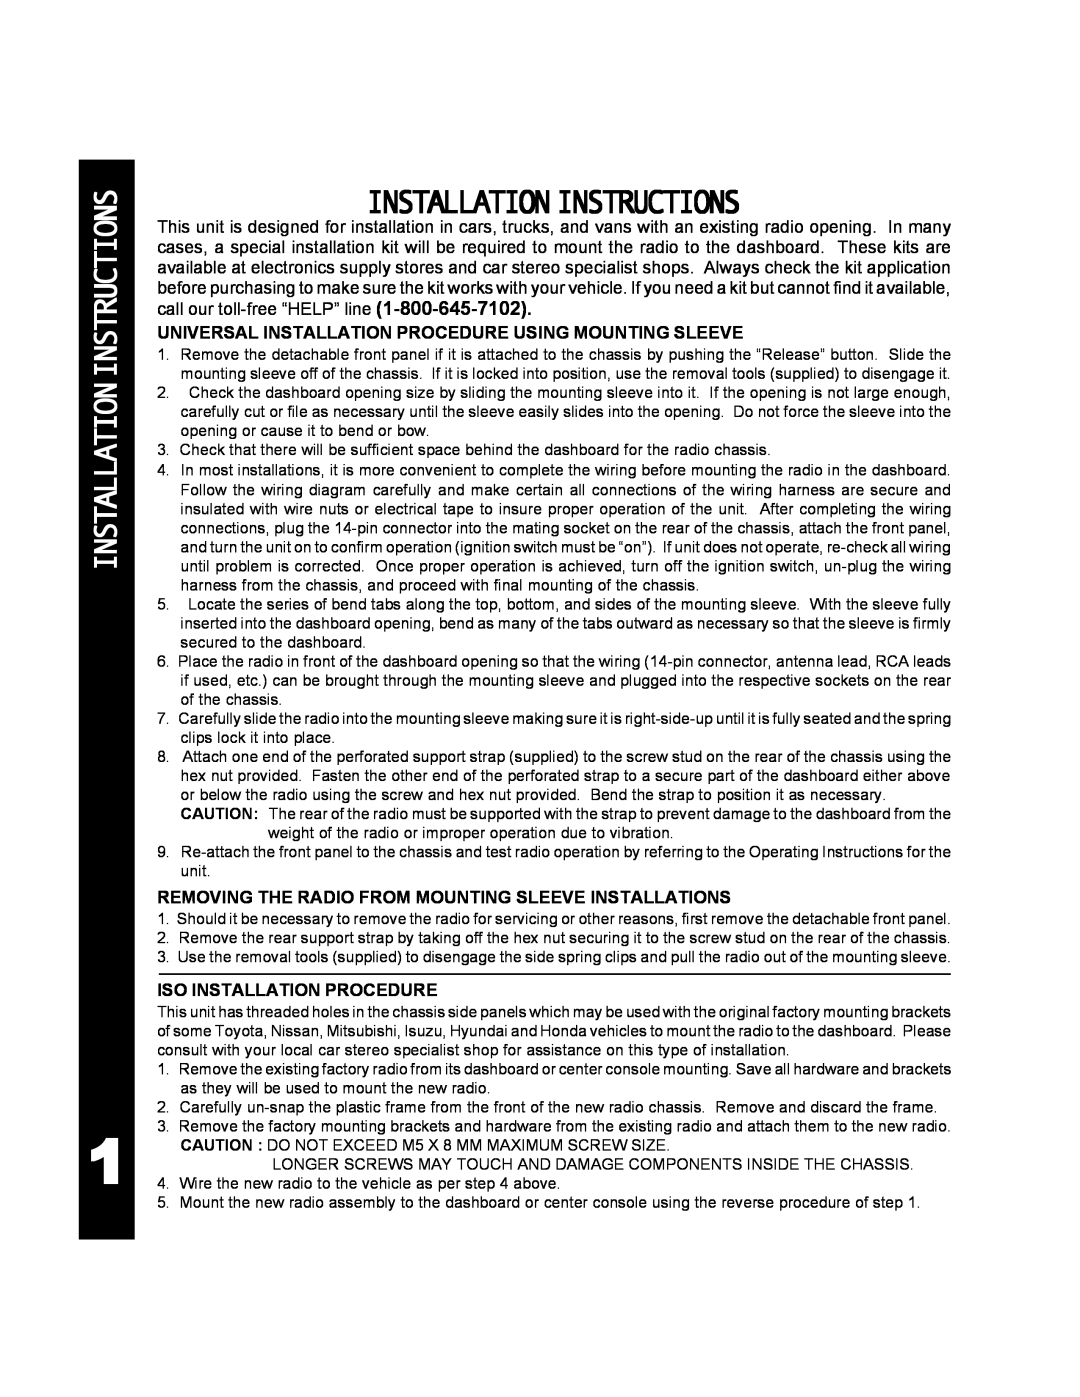 Audiovox ACD-25 manual Installationinstructions 